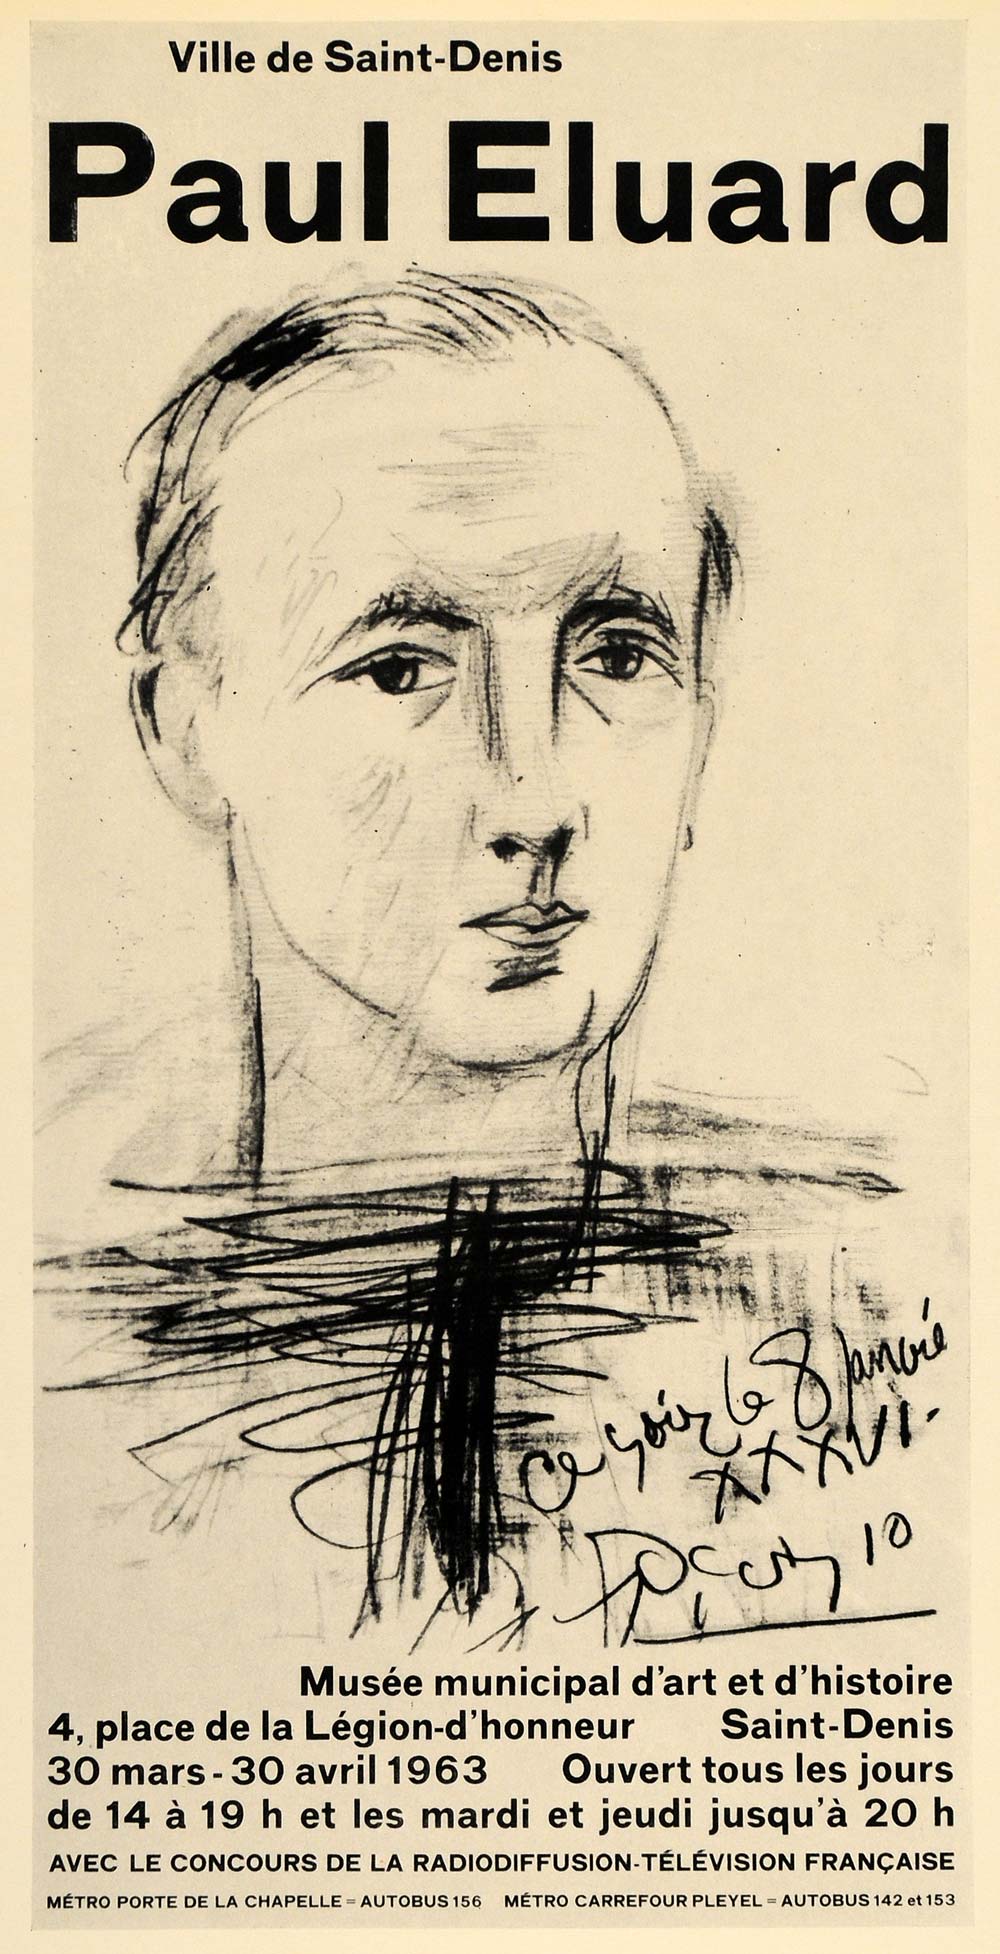 1971 Print Picasso Paul Eluard Saint Denis France 1963 - ORIGINAL PIC3